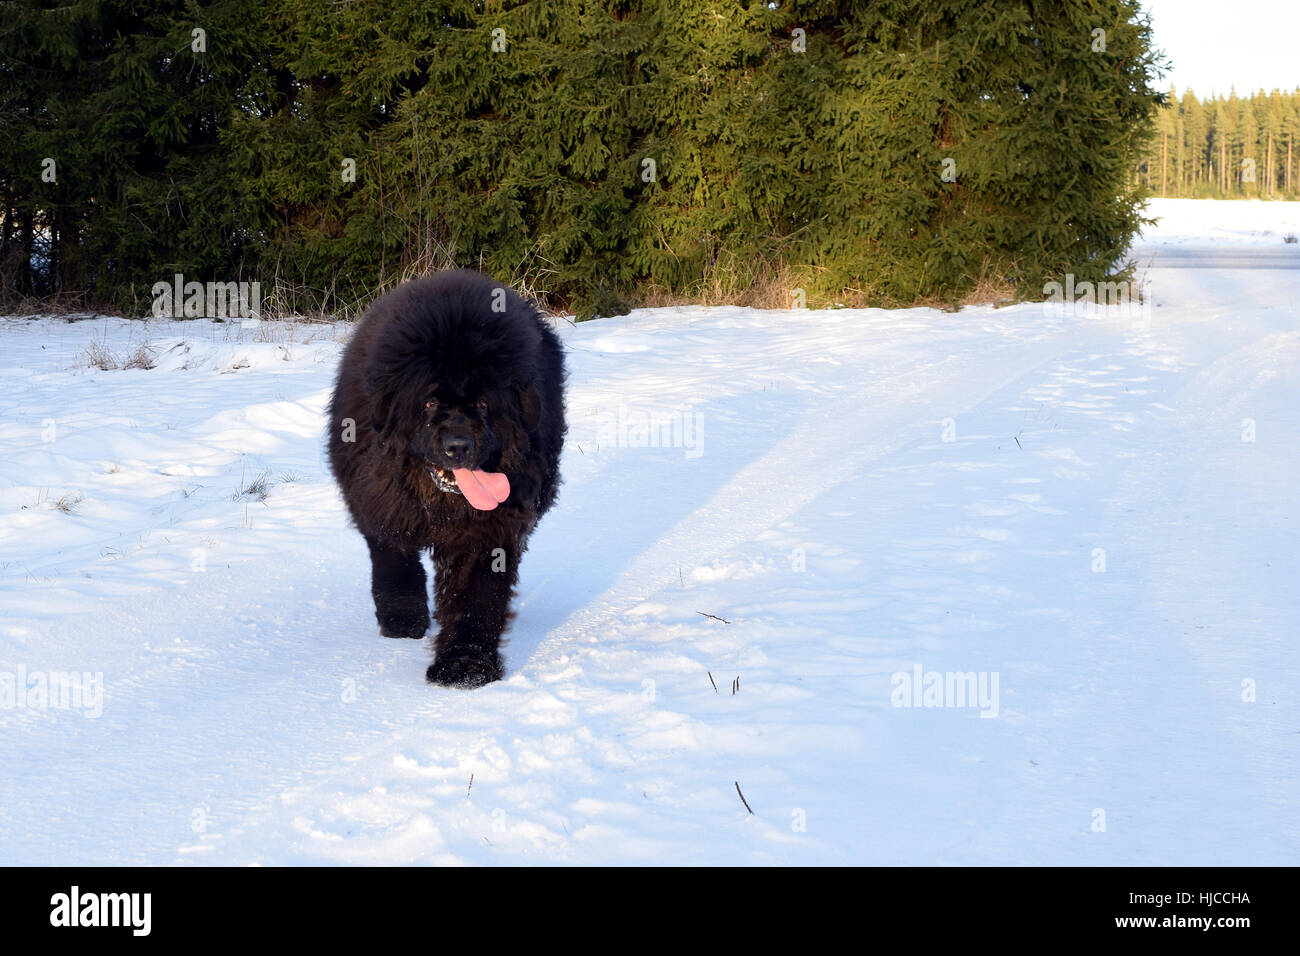 Newfoundland dog walking on snowy winter yard Banque D'Images